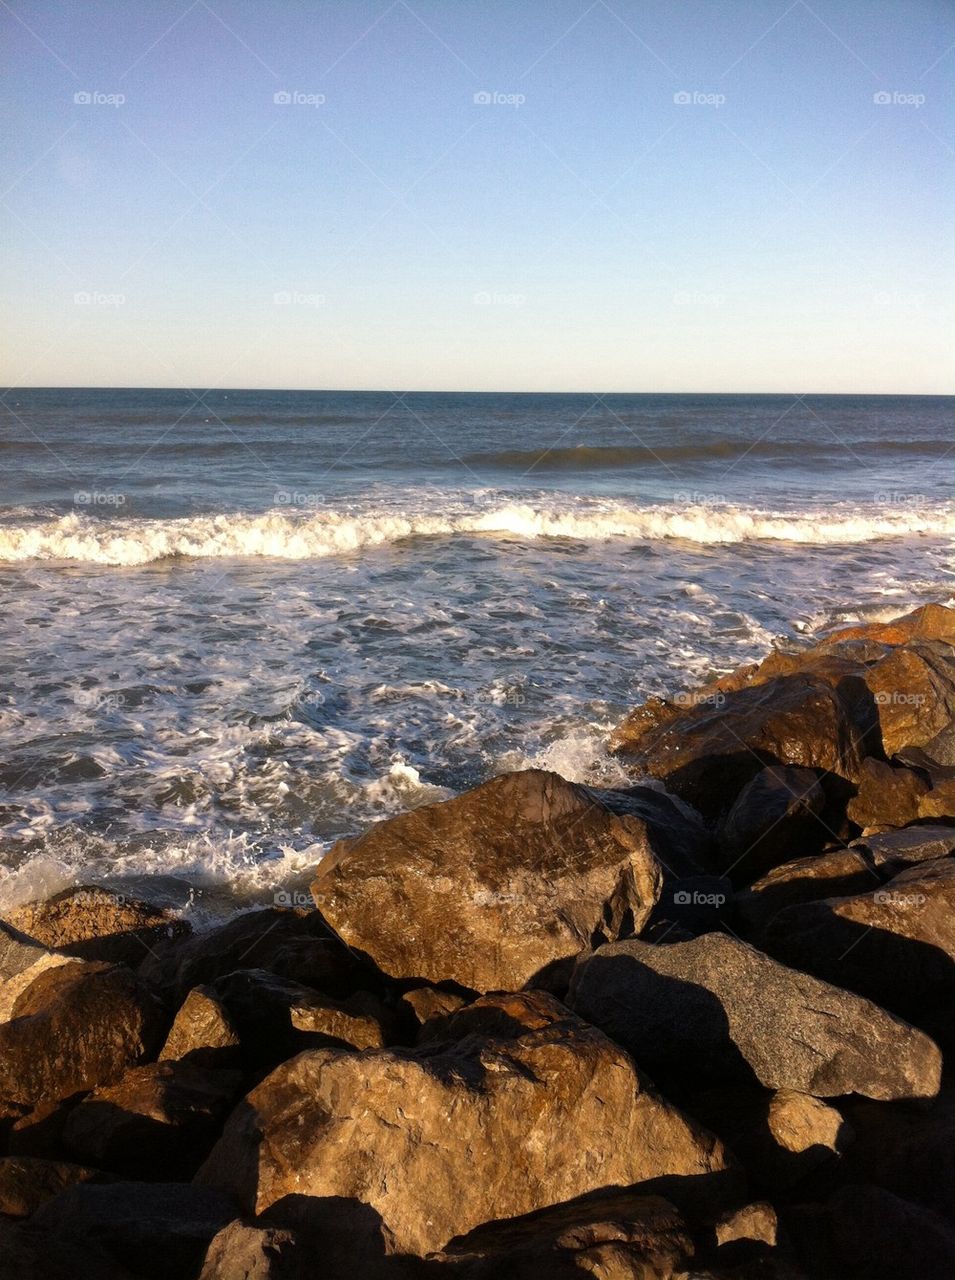 Ocean rocks